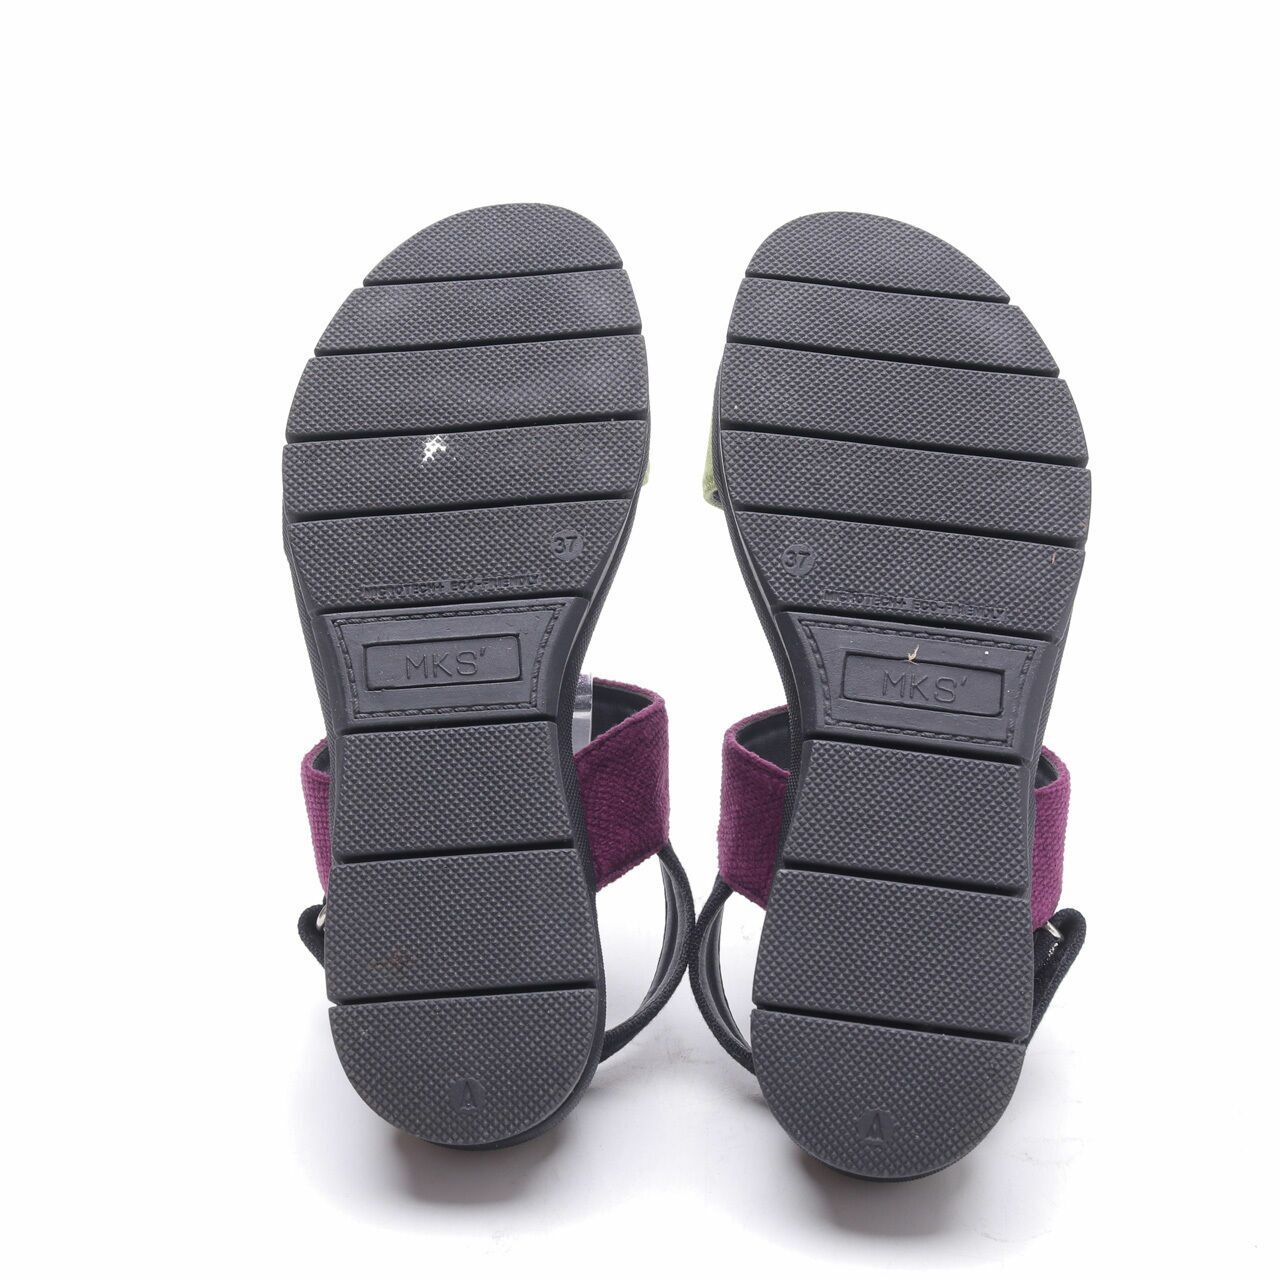 MKS Green & Purple Strap Back Sandals